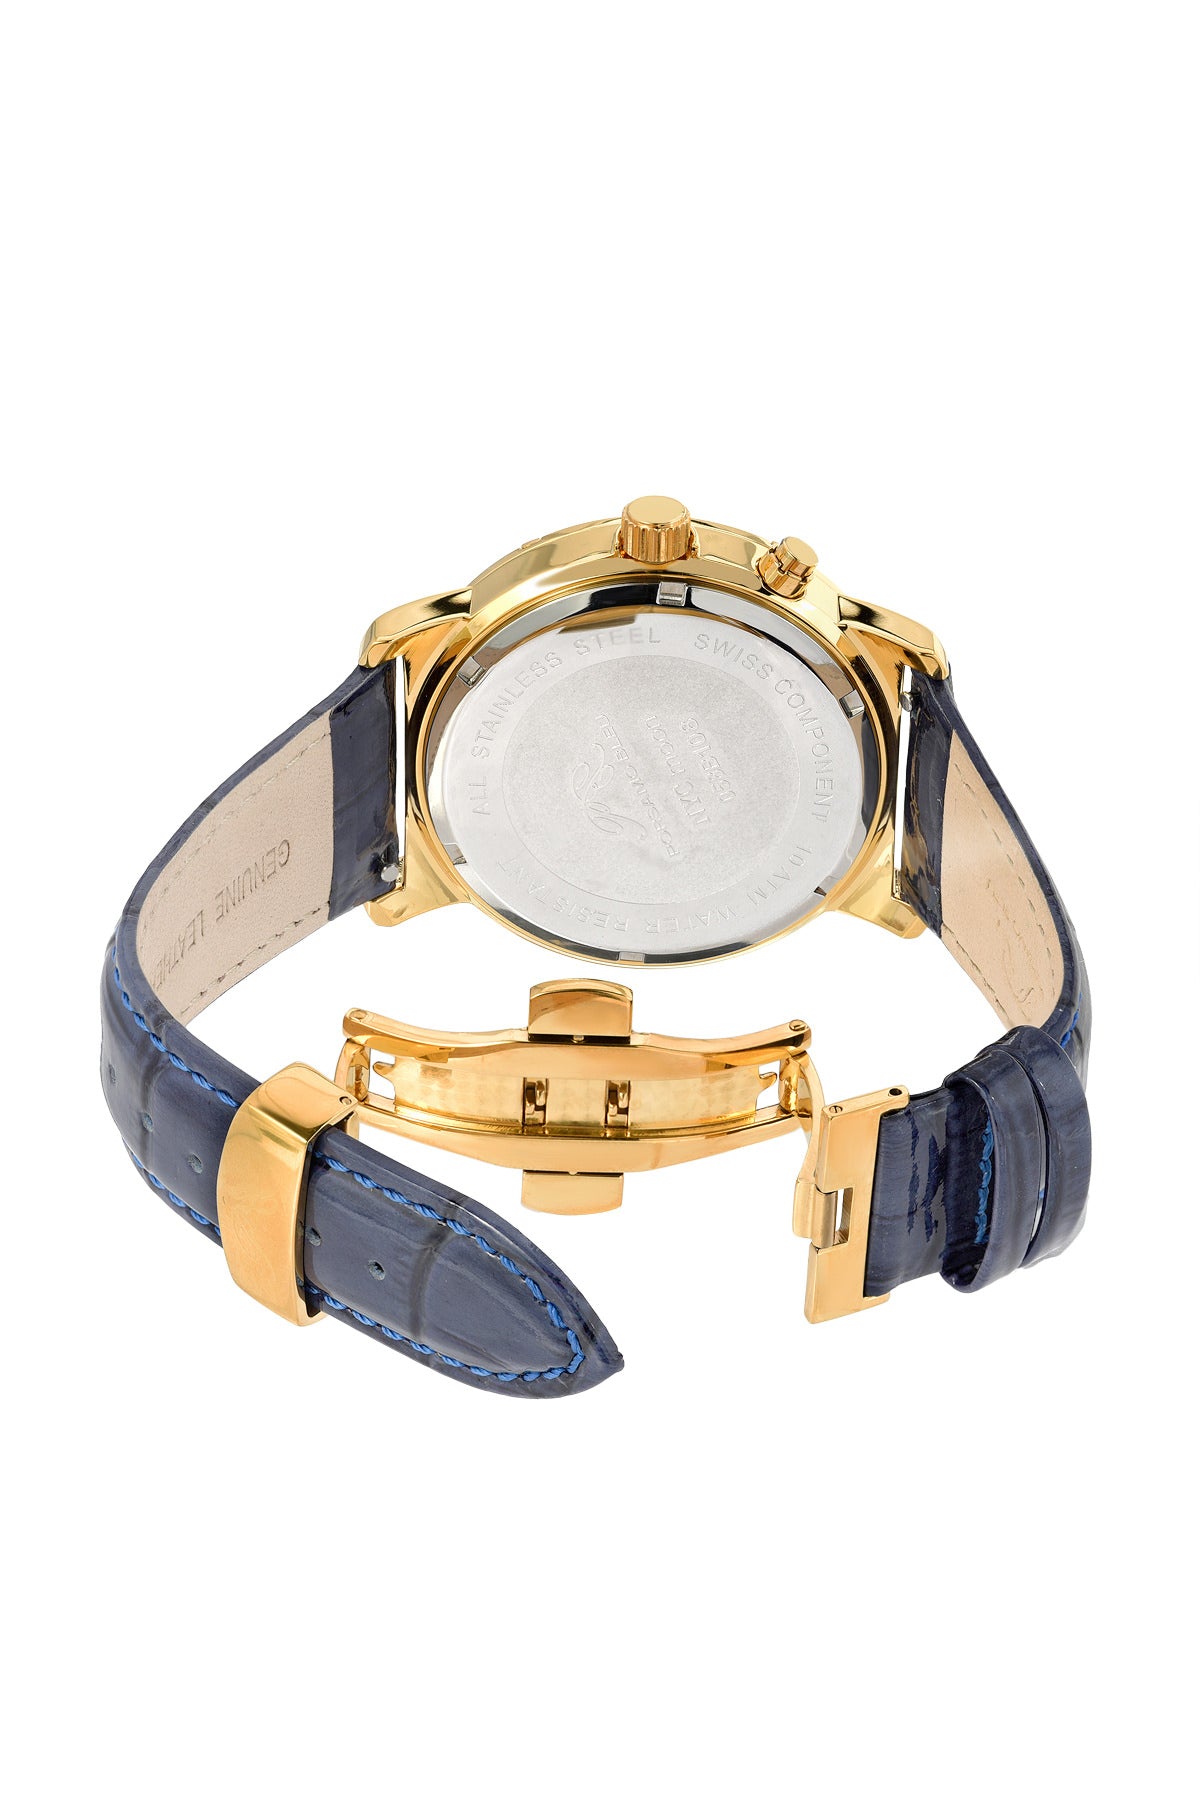 Porsamo Bleu NYC Moon luxury men's watch, genuine leather band, gold, blue 058BNYL